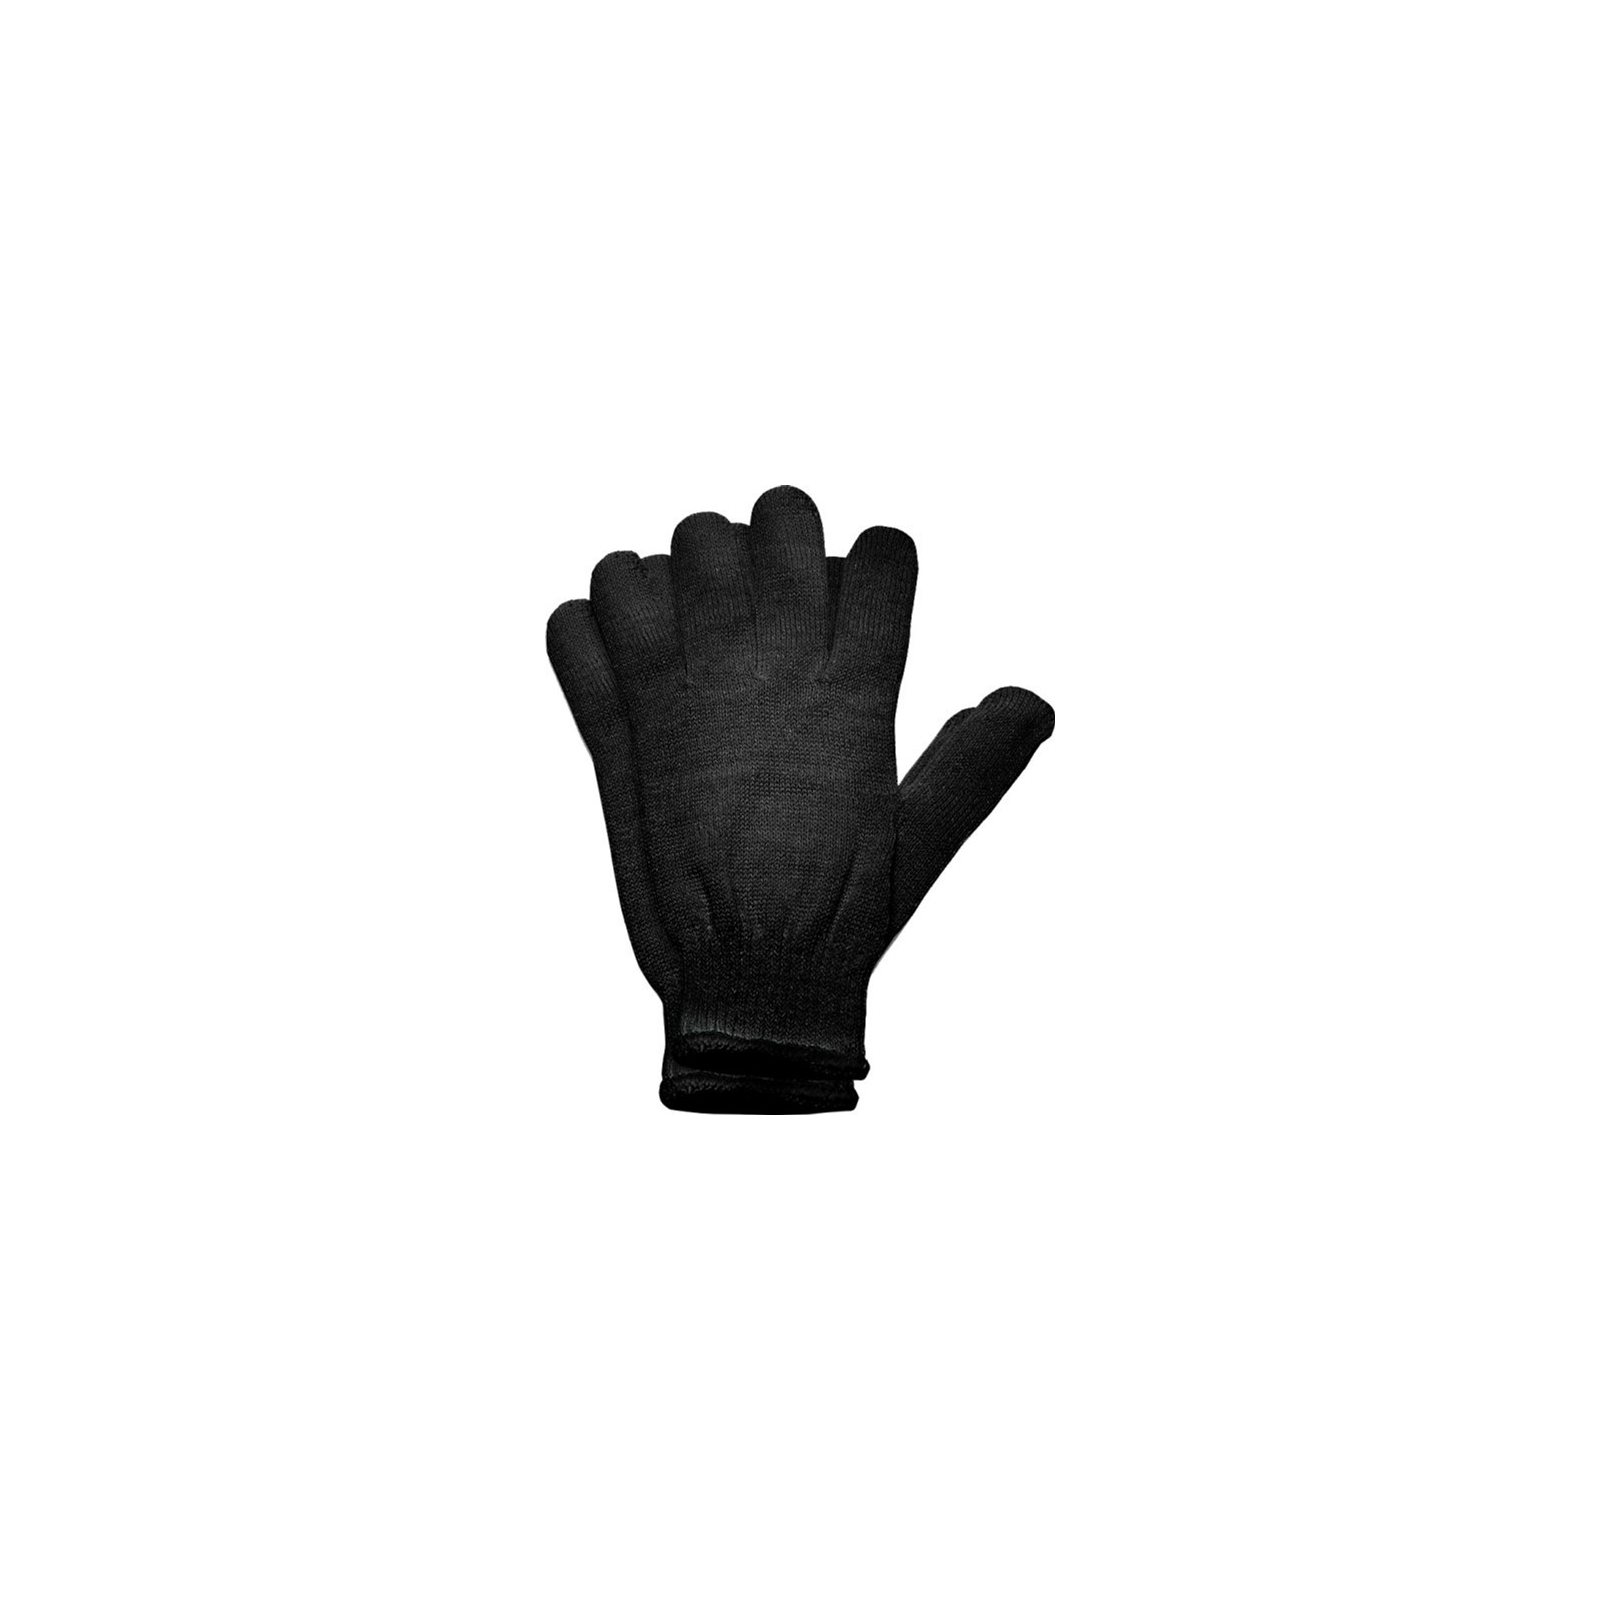 Защитные перчатки Stark Black двойные (510840120)